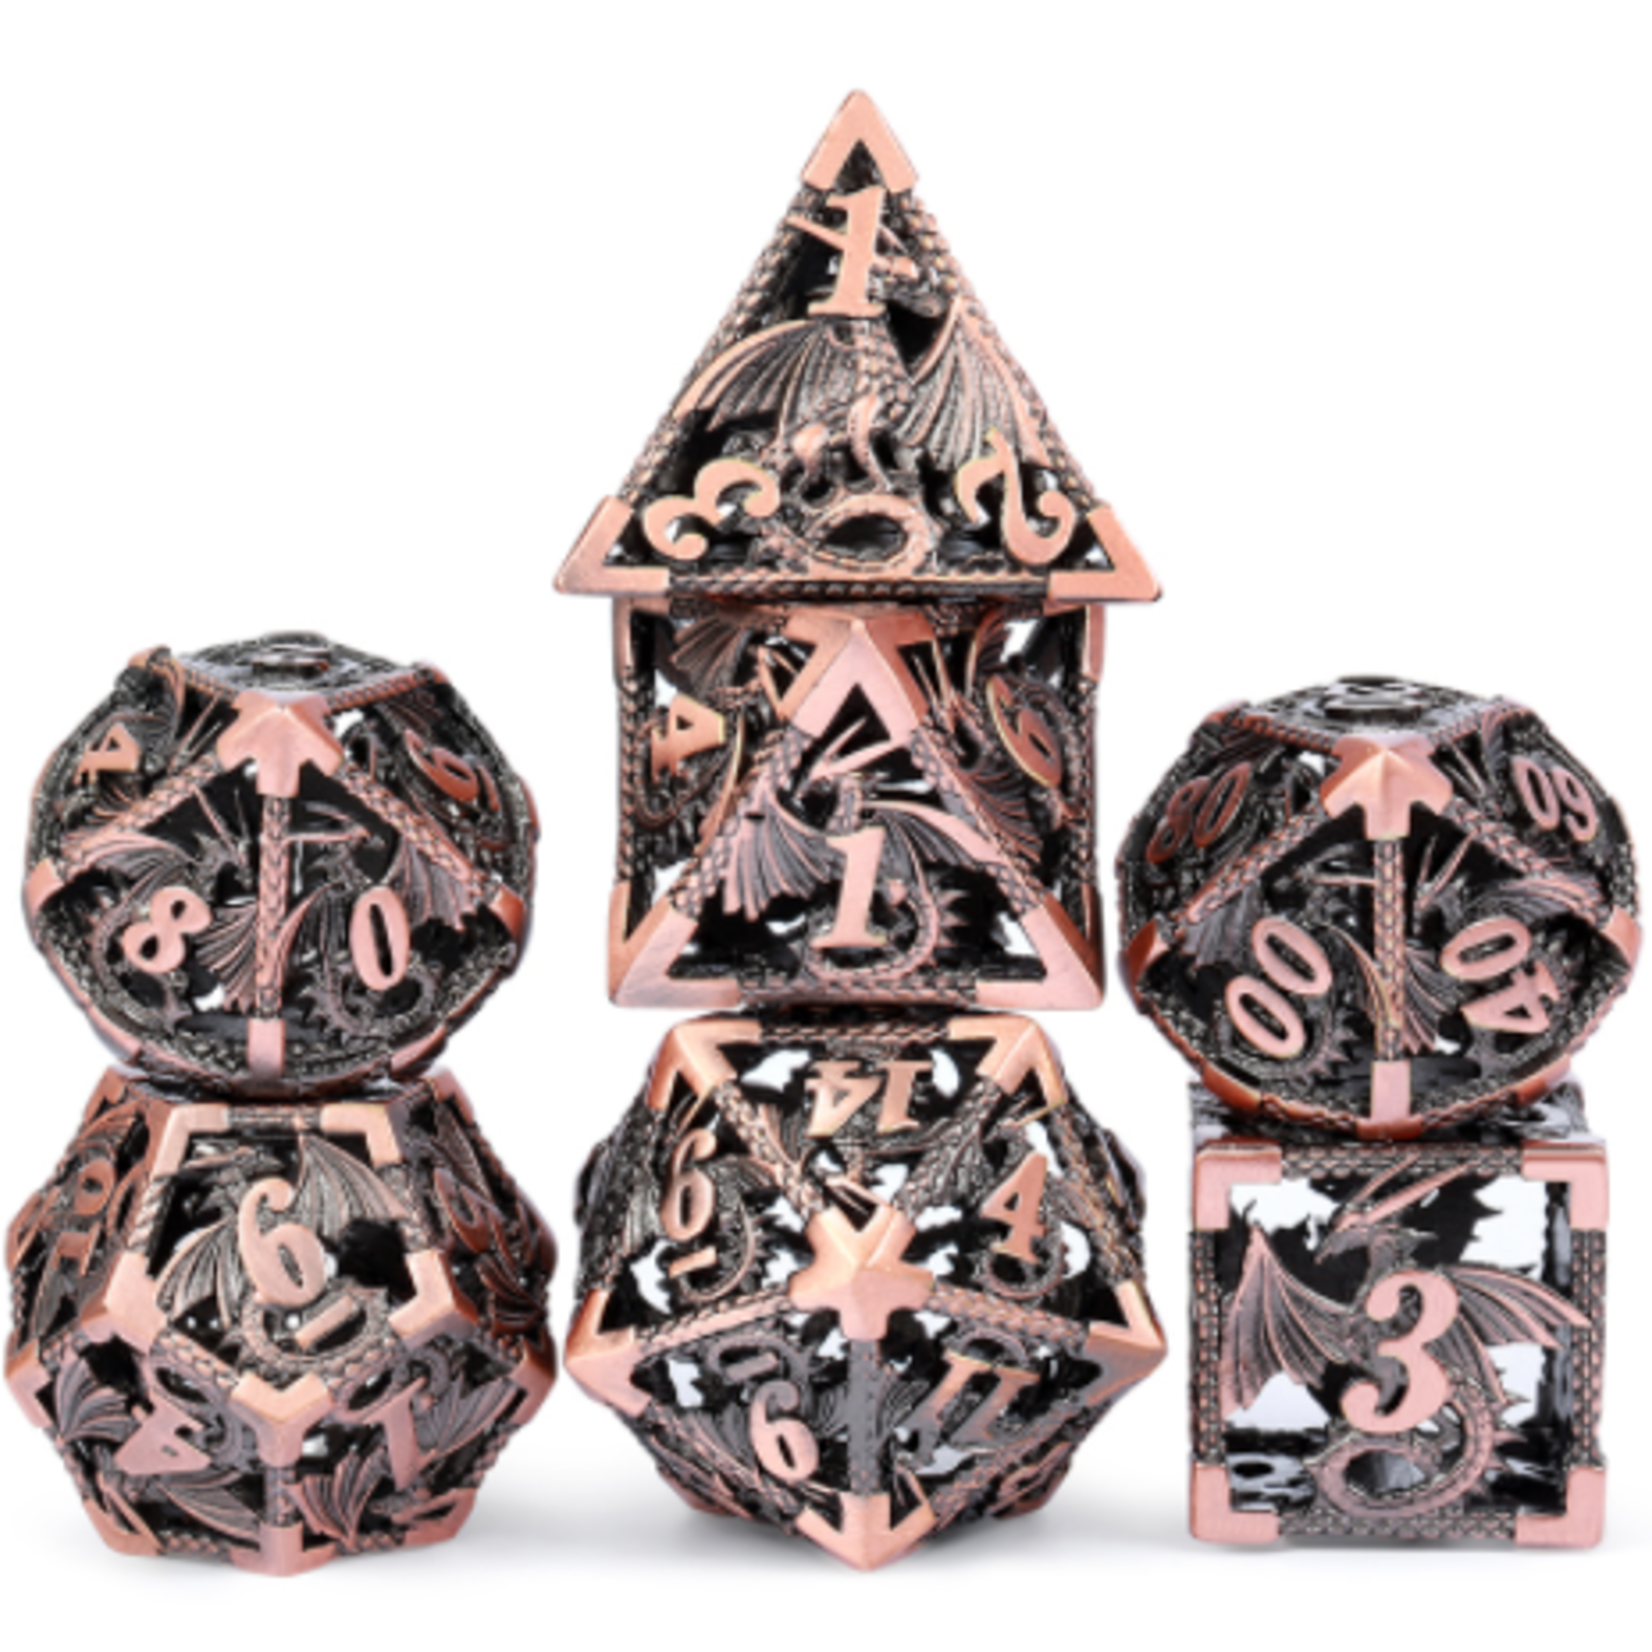 Dice Habit Hollow Dice Set Dragon Copper Polyhedral 7 die set